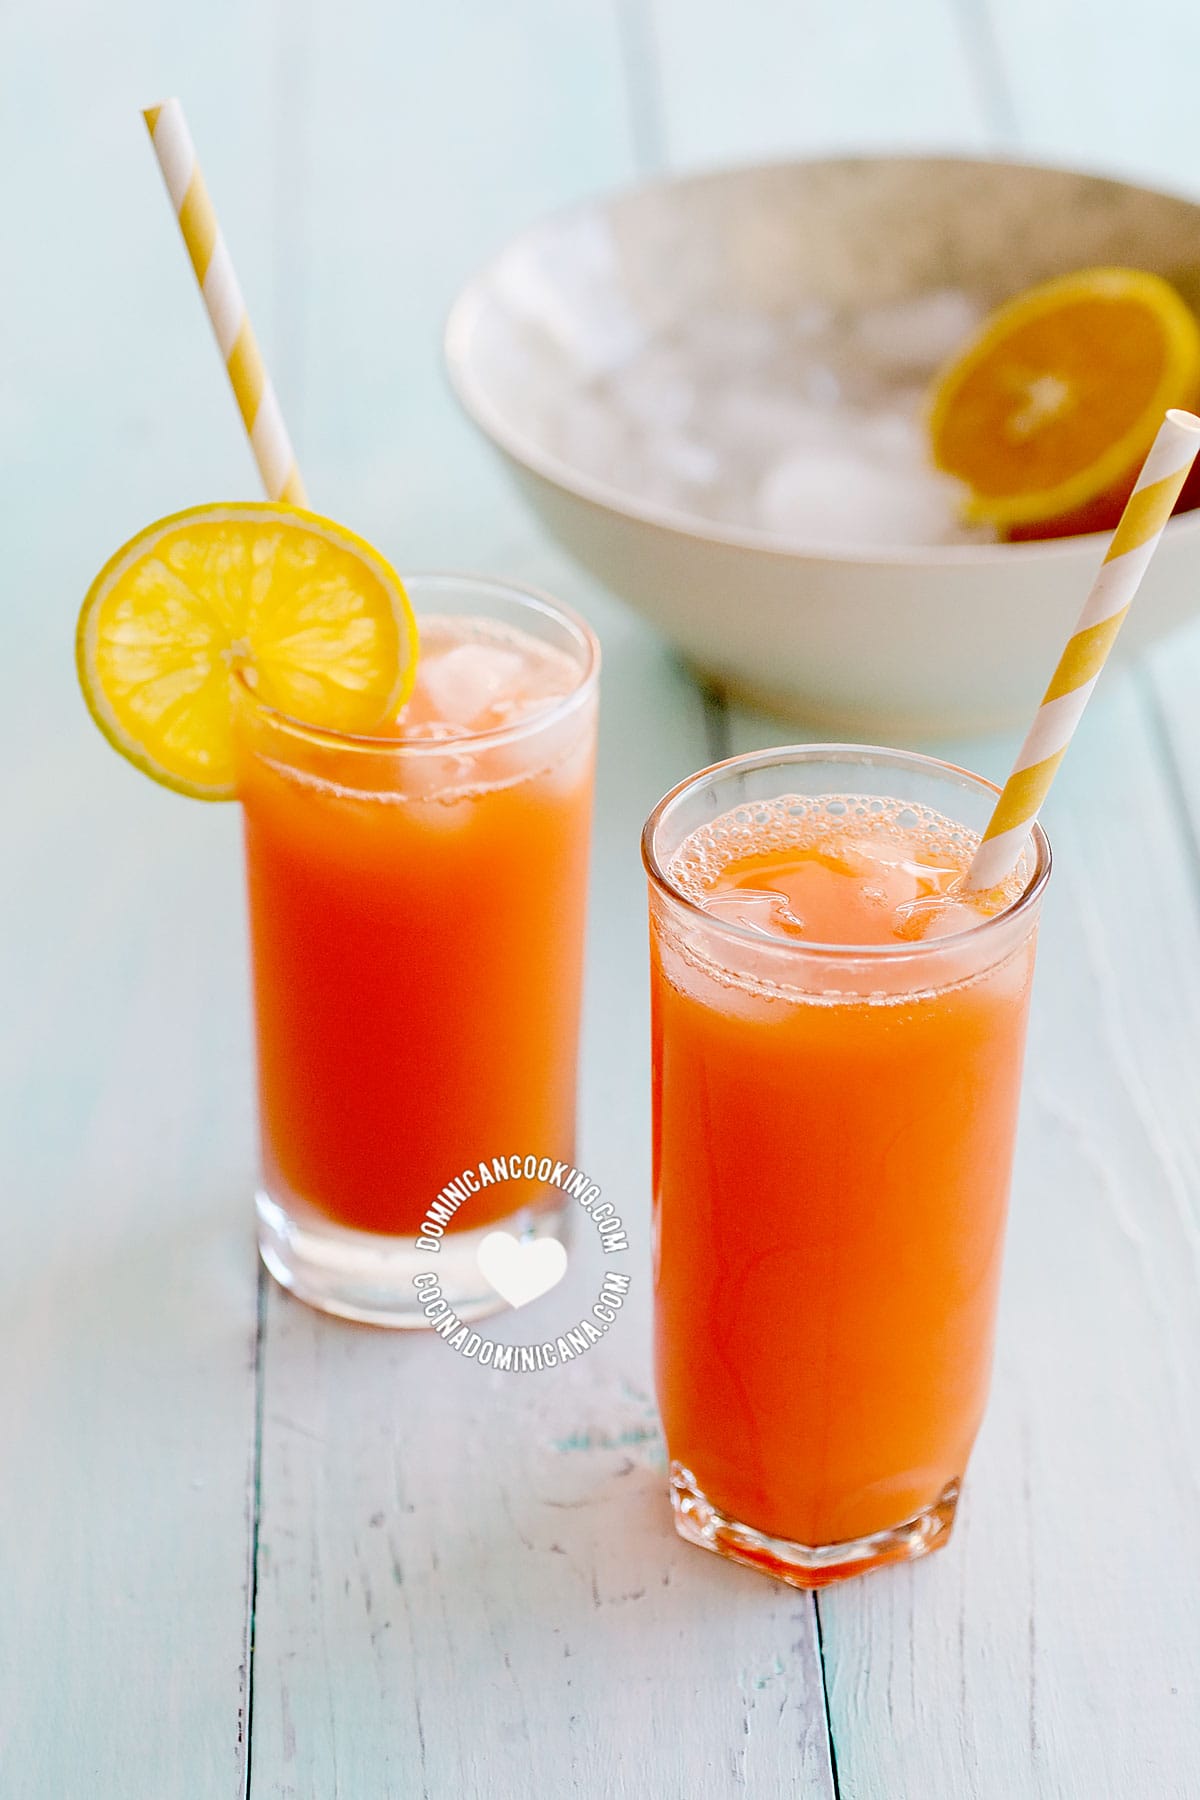 Jugo de Zanahoria y Naranja (Carrot and Orange Juice)